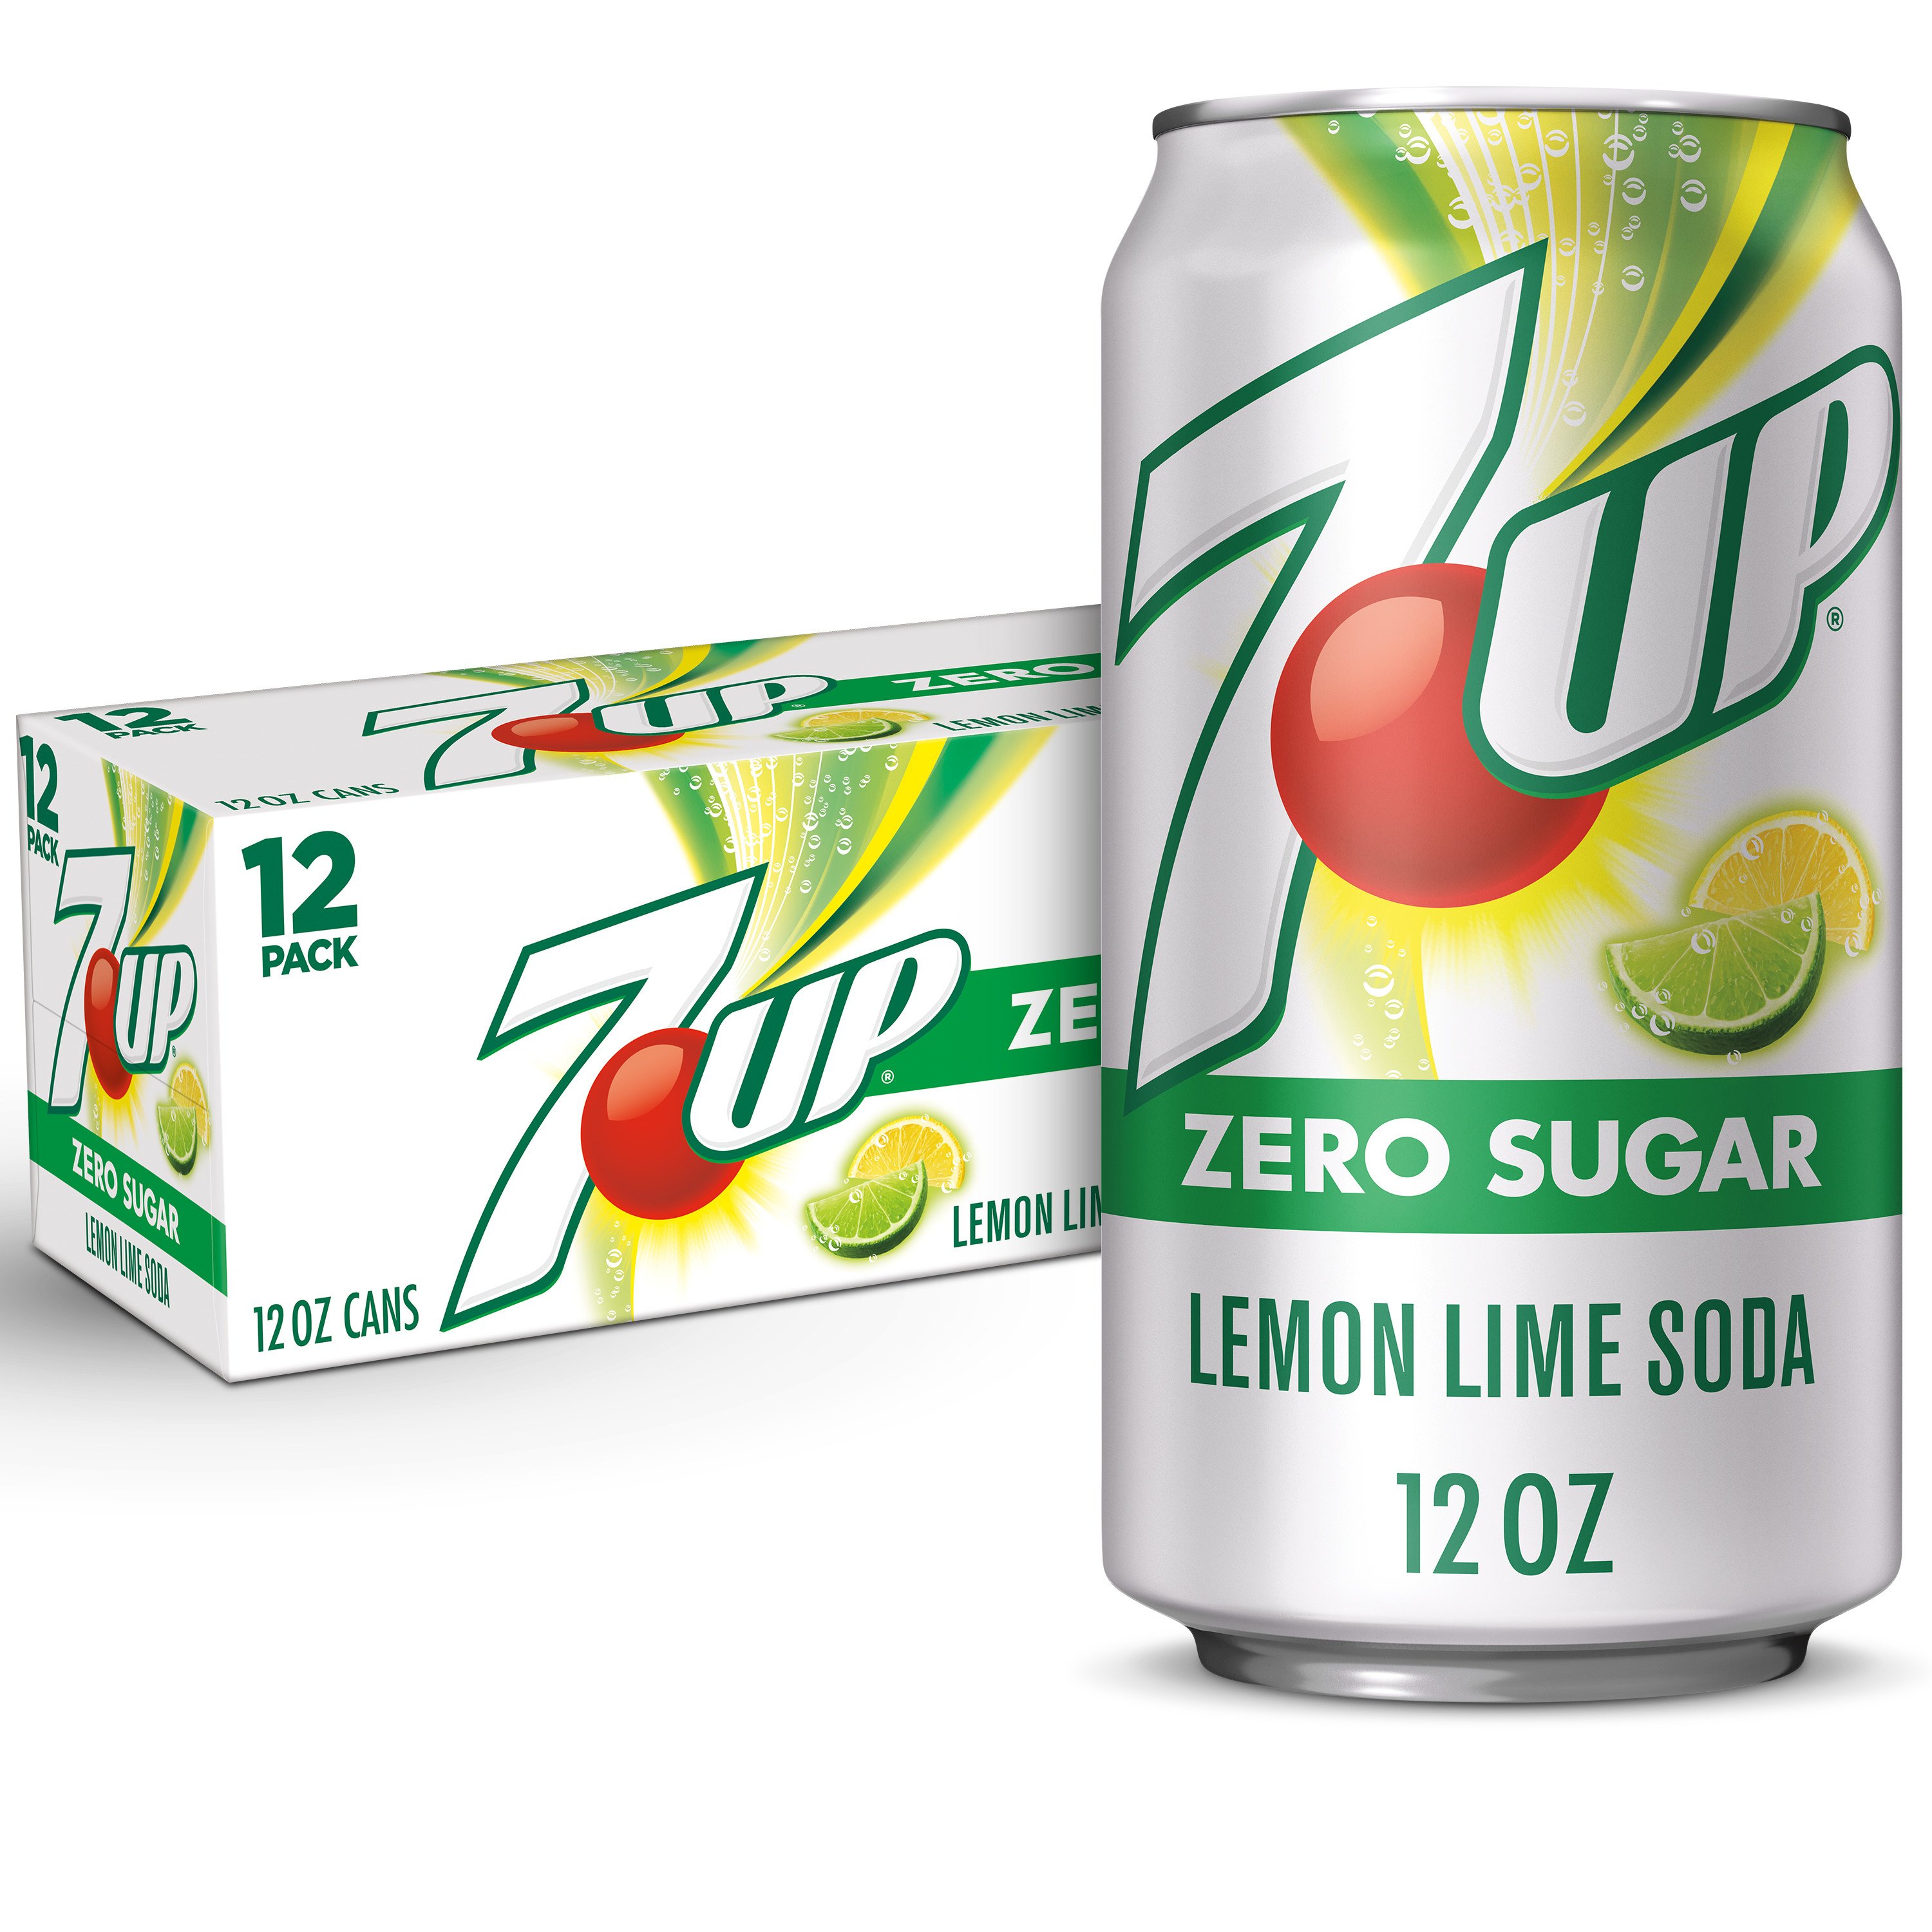 7UP Zero Sugar Lemon Lime Flavored Soda - Shop Soda at H-E-B